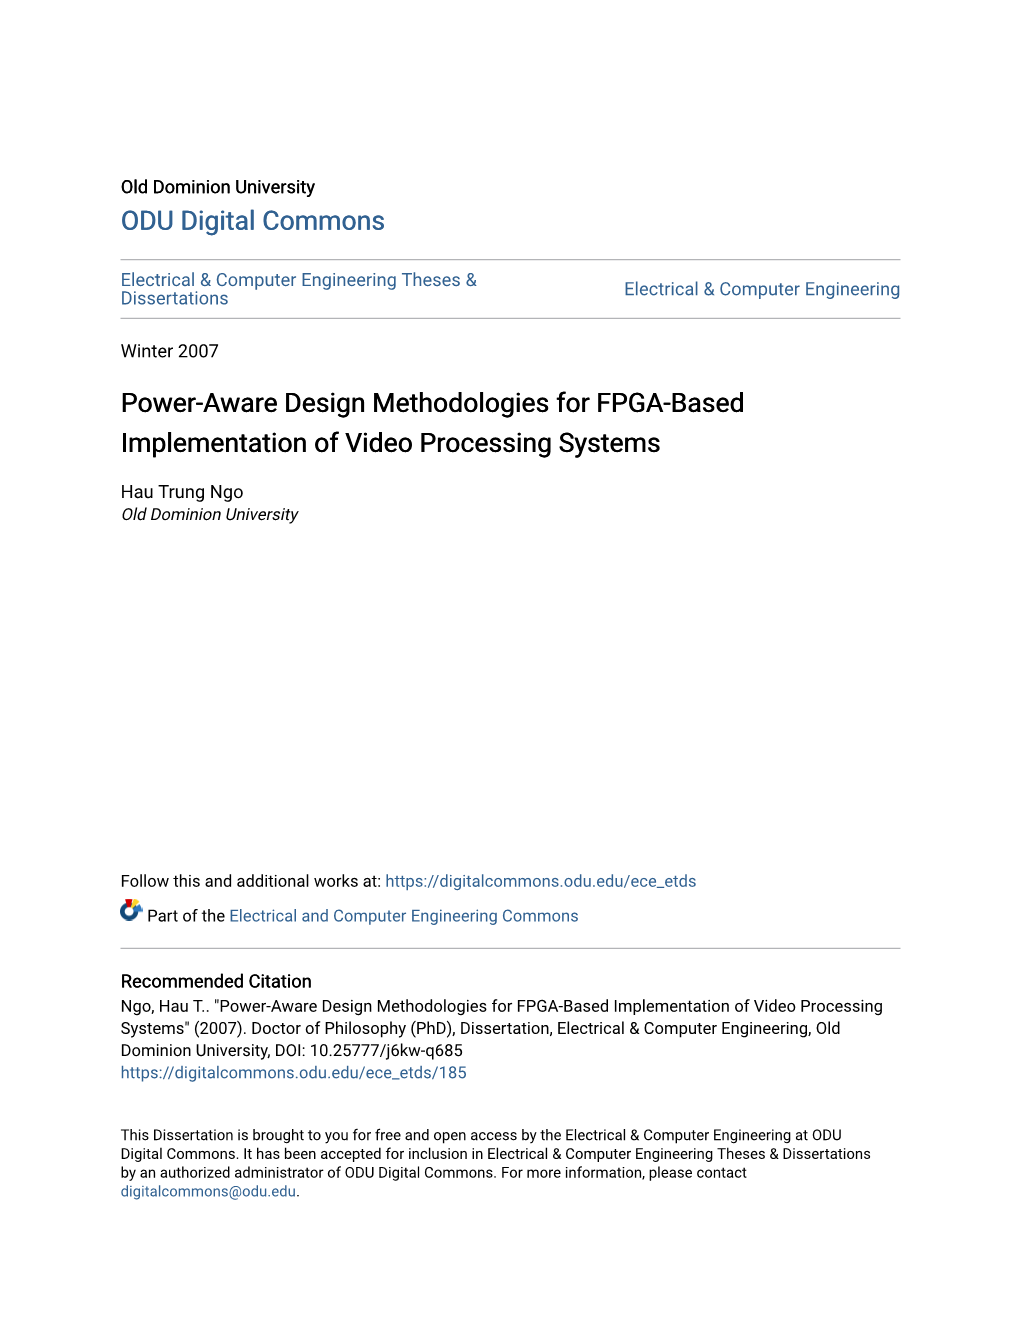 Power-Aware Design Methodologies for FPGA-Based Implementation of Video Processing Systems